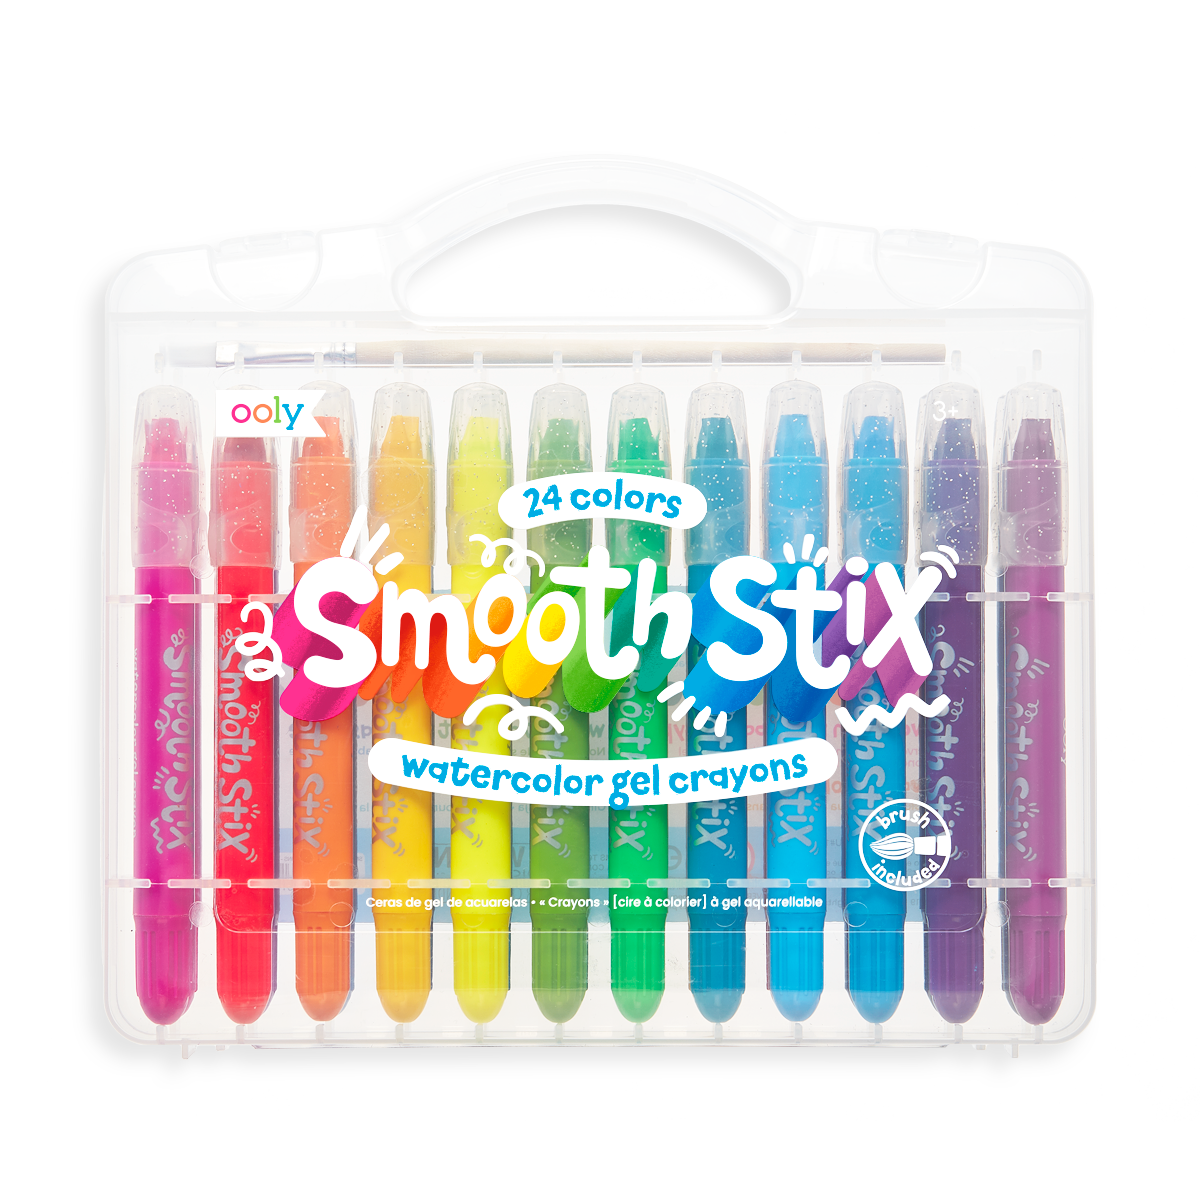 Smooth Stix Watercolor Gel Crayons - Set of 24 -OOLY